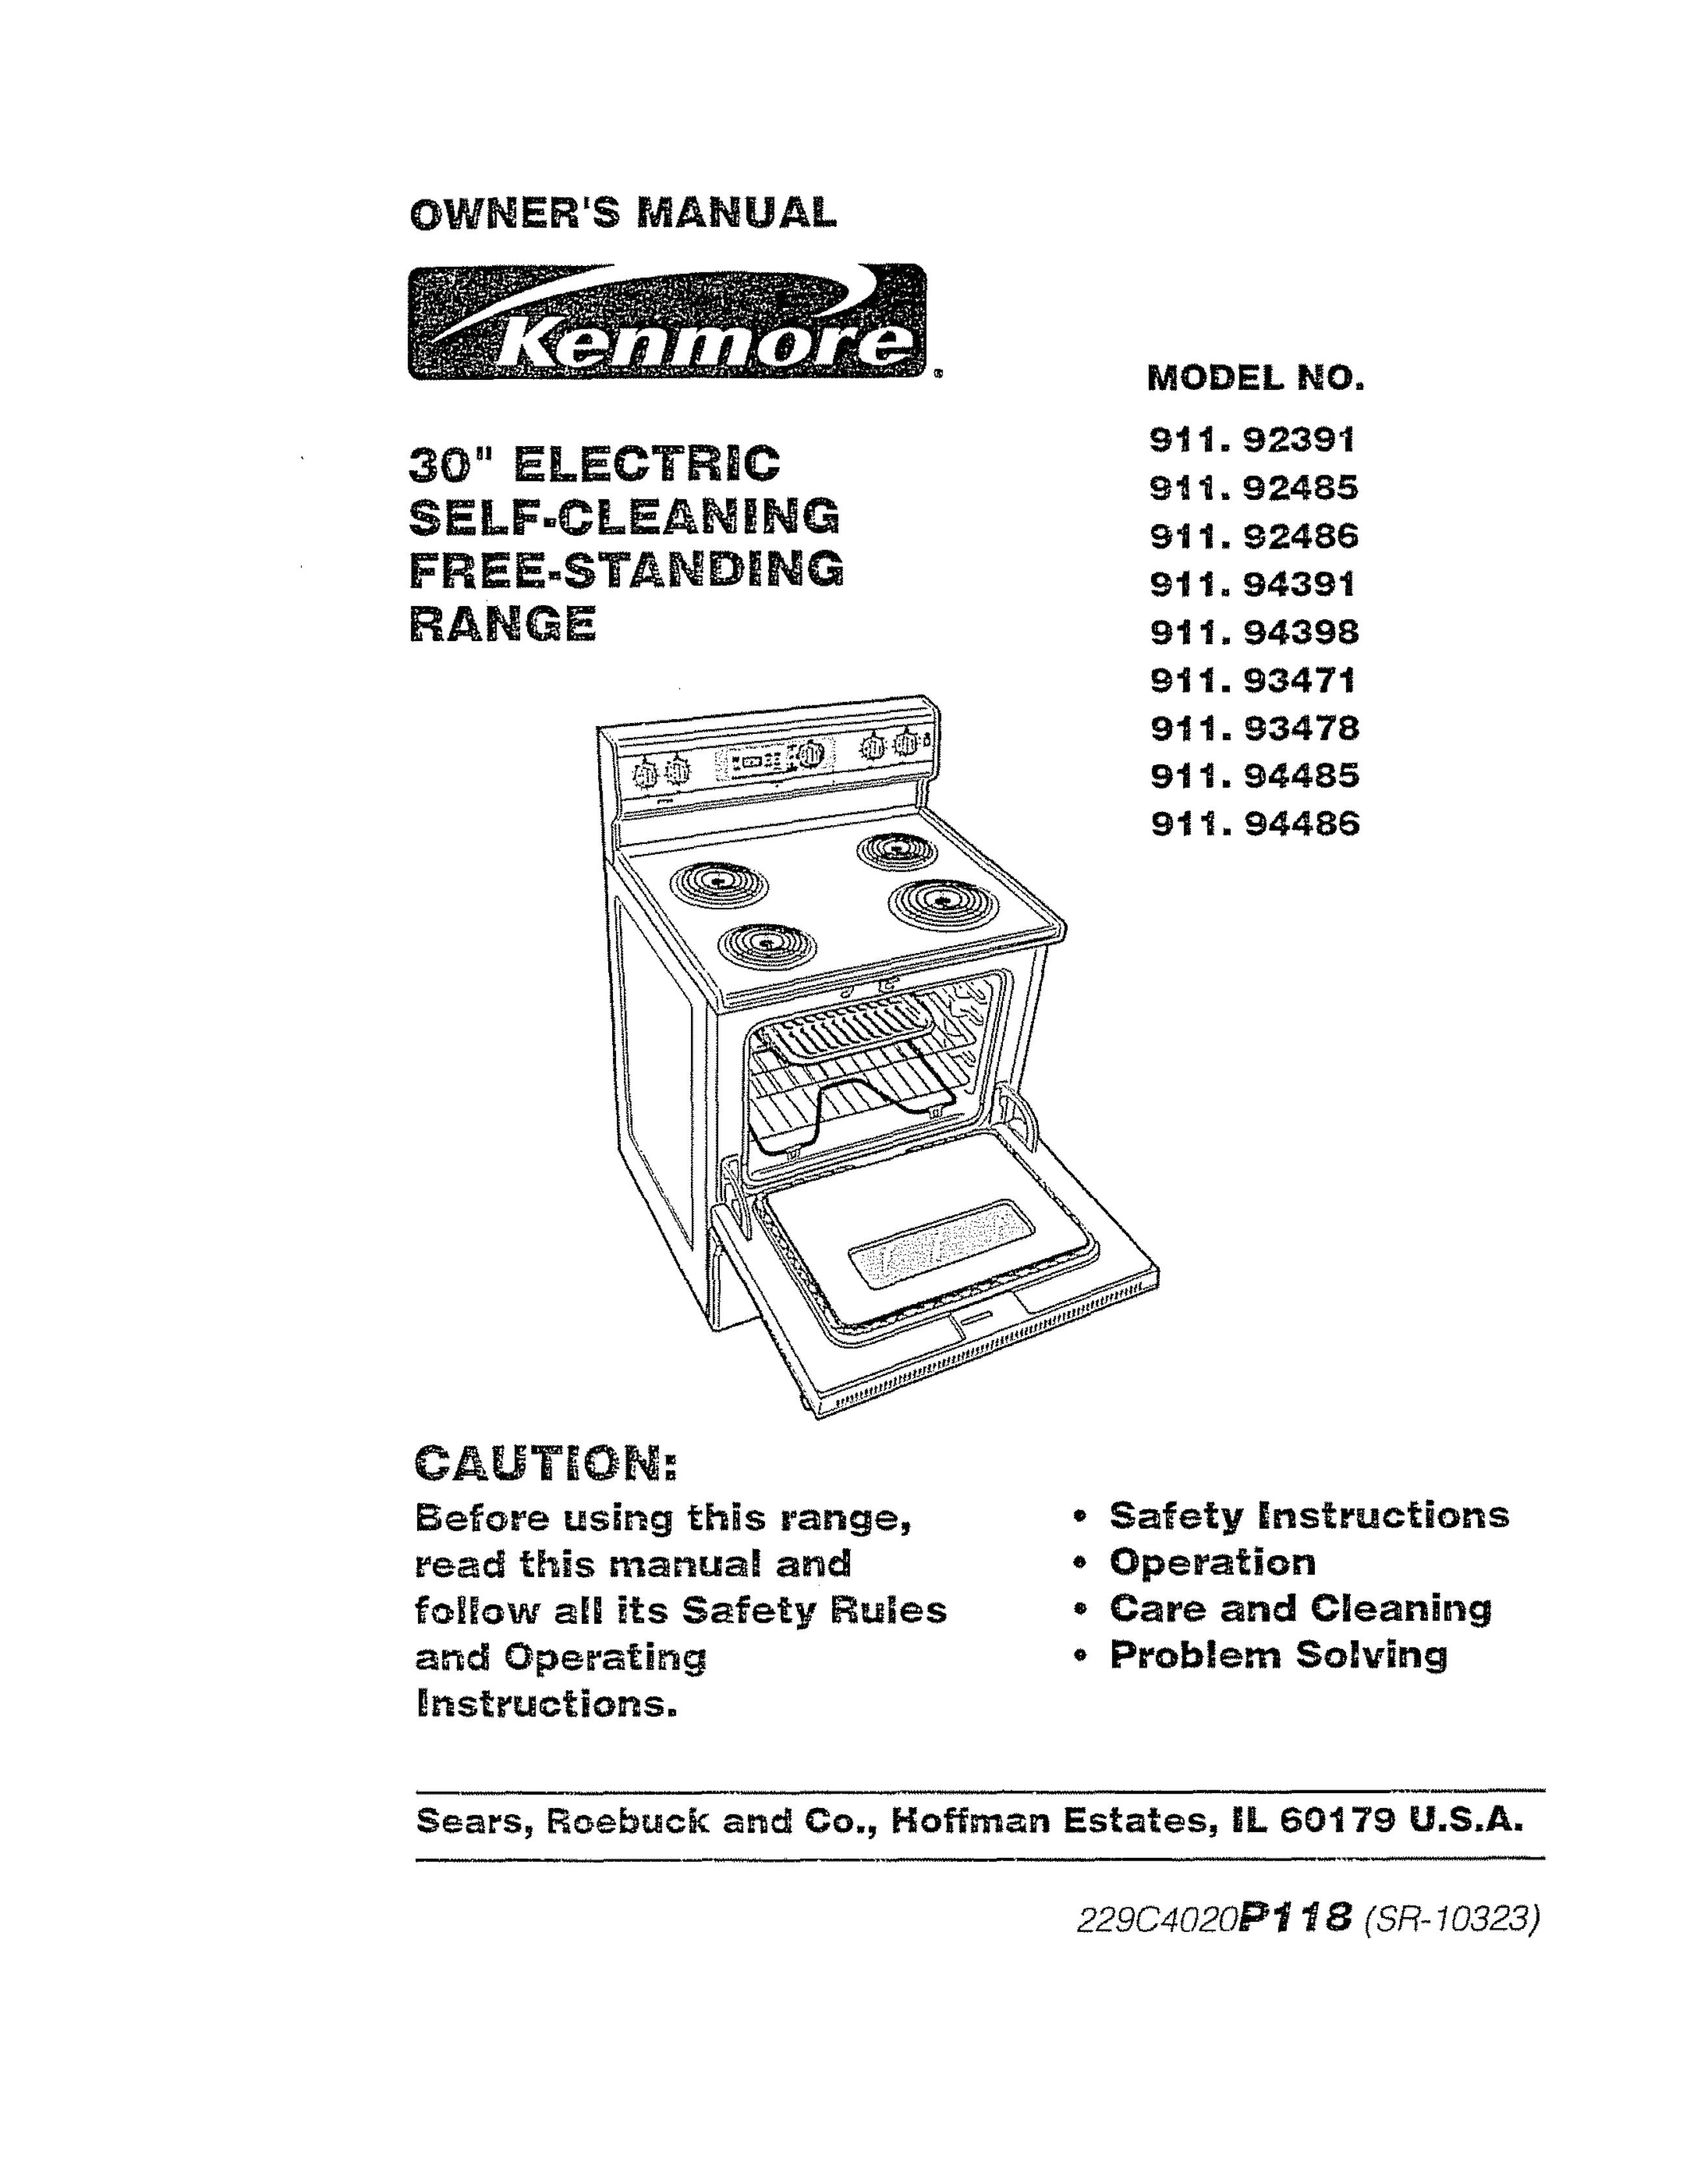 Kenmore 911.92486 Oven User Manual